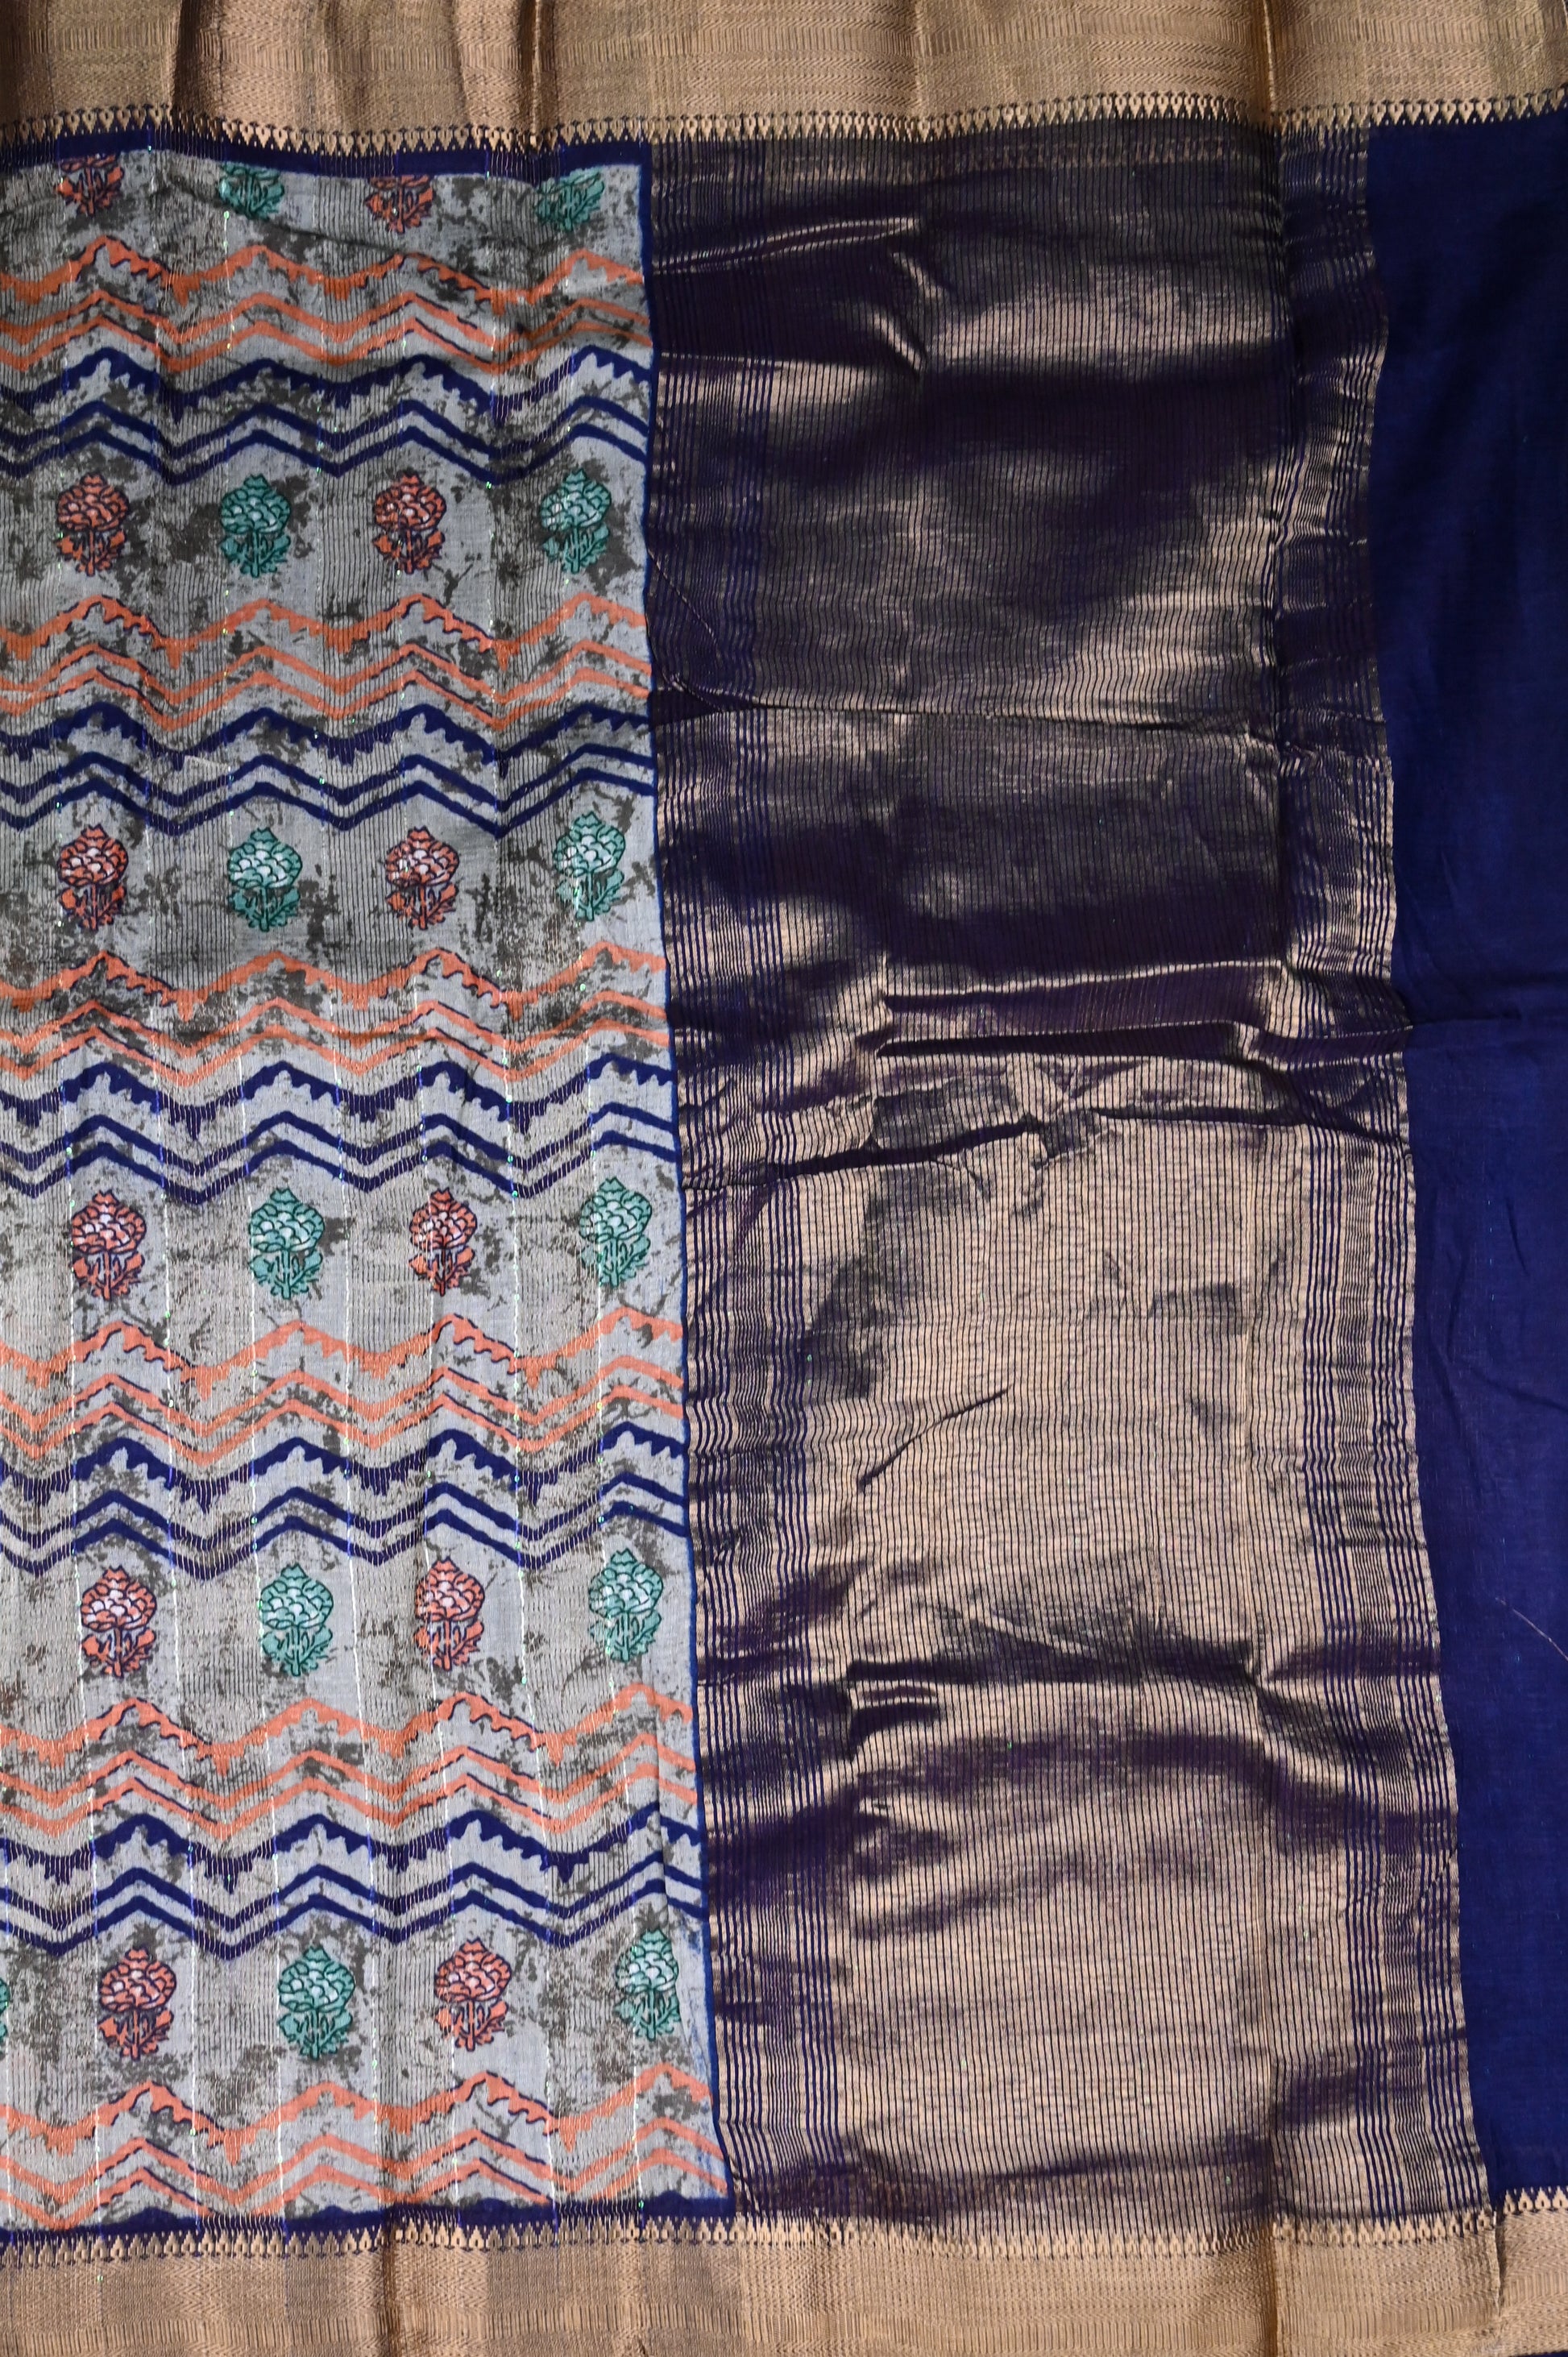 Jute fancy saree grey color with allover prints, short pallu, small gold zari kaddi border and contrast blouse